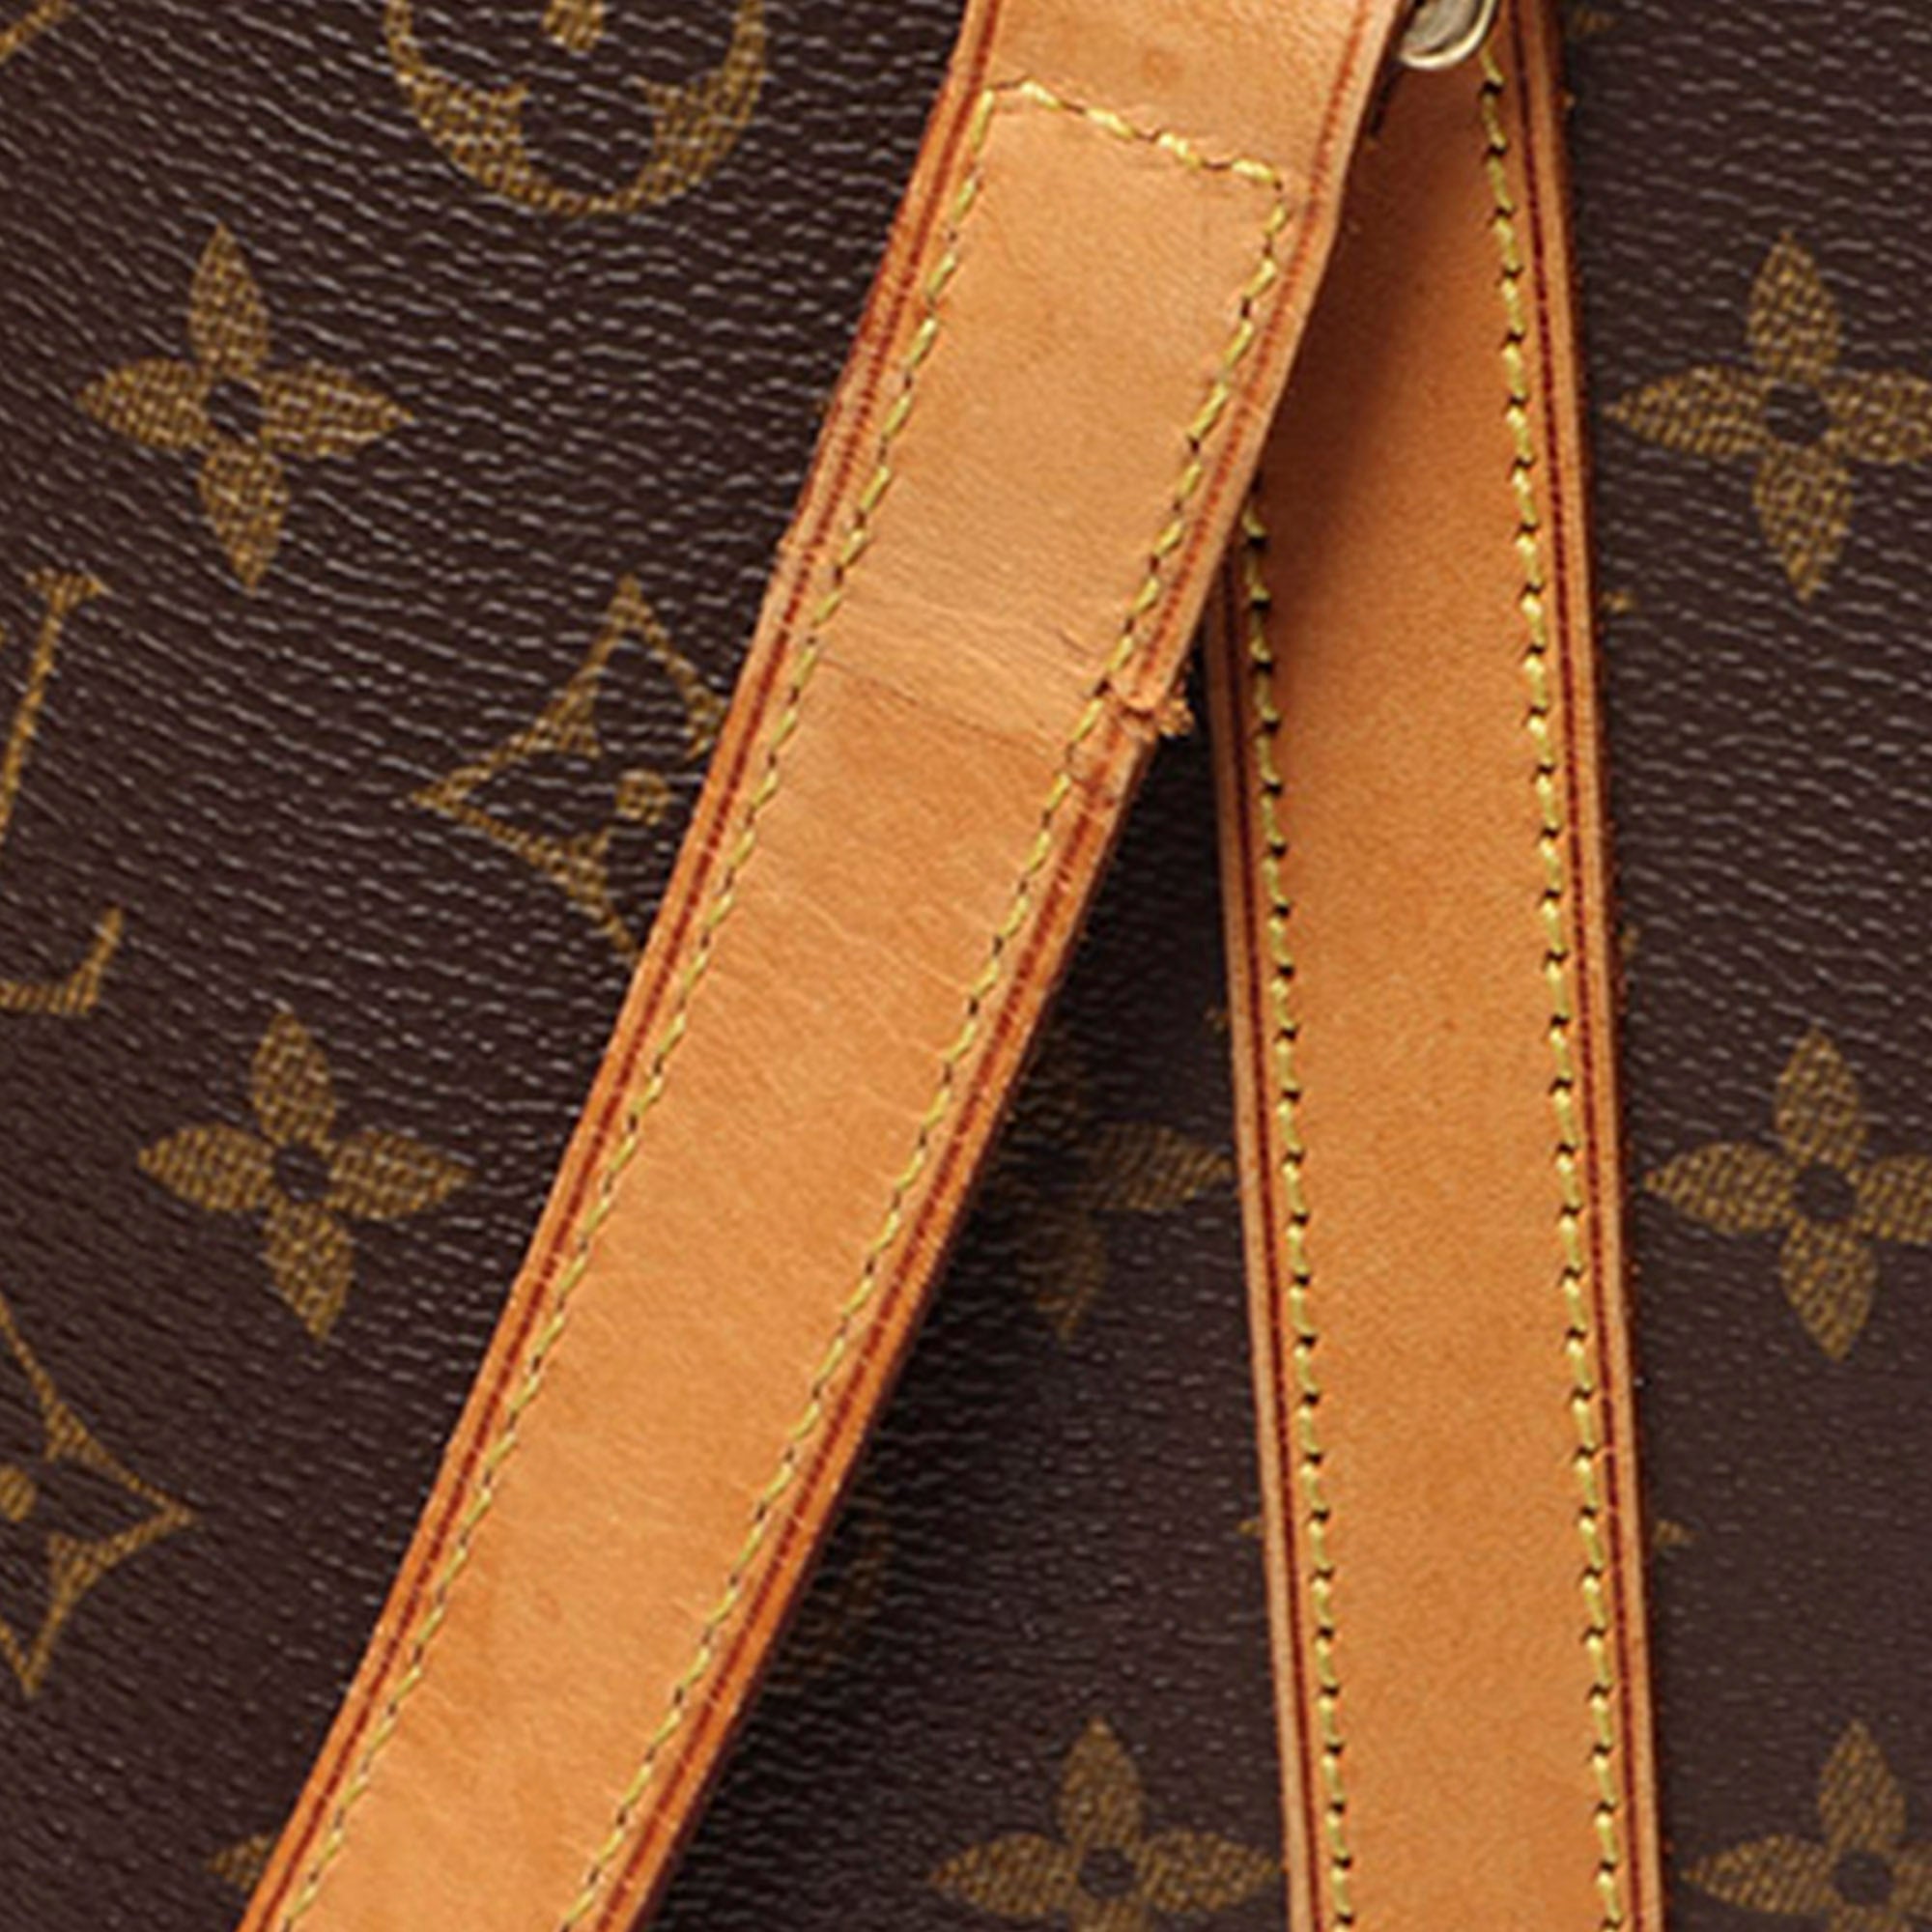 RvceShops Revival, Brown Louis Vuitton Monogram Babylone Shoulder Bag